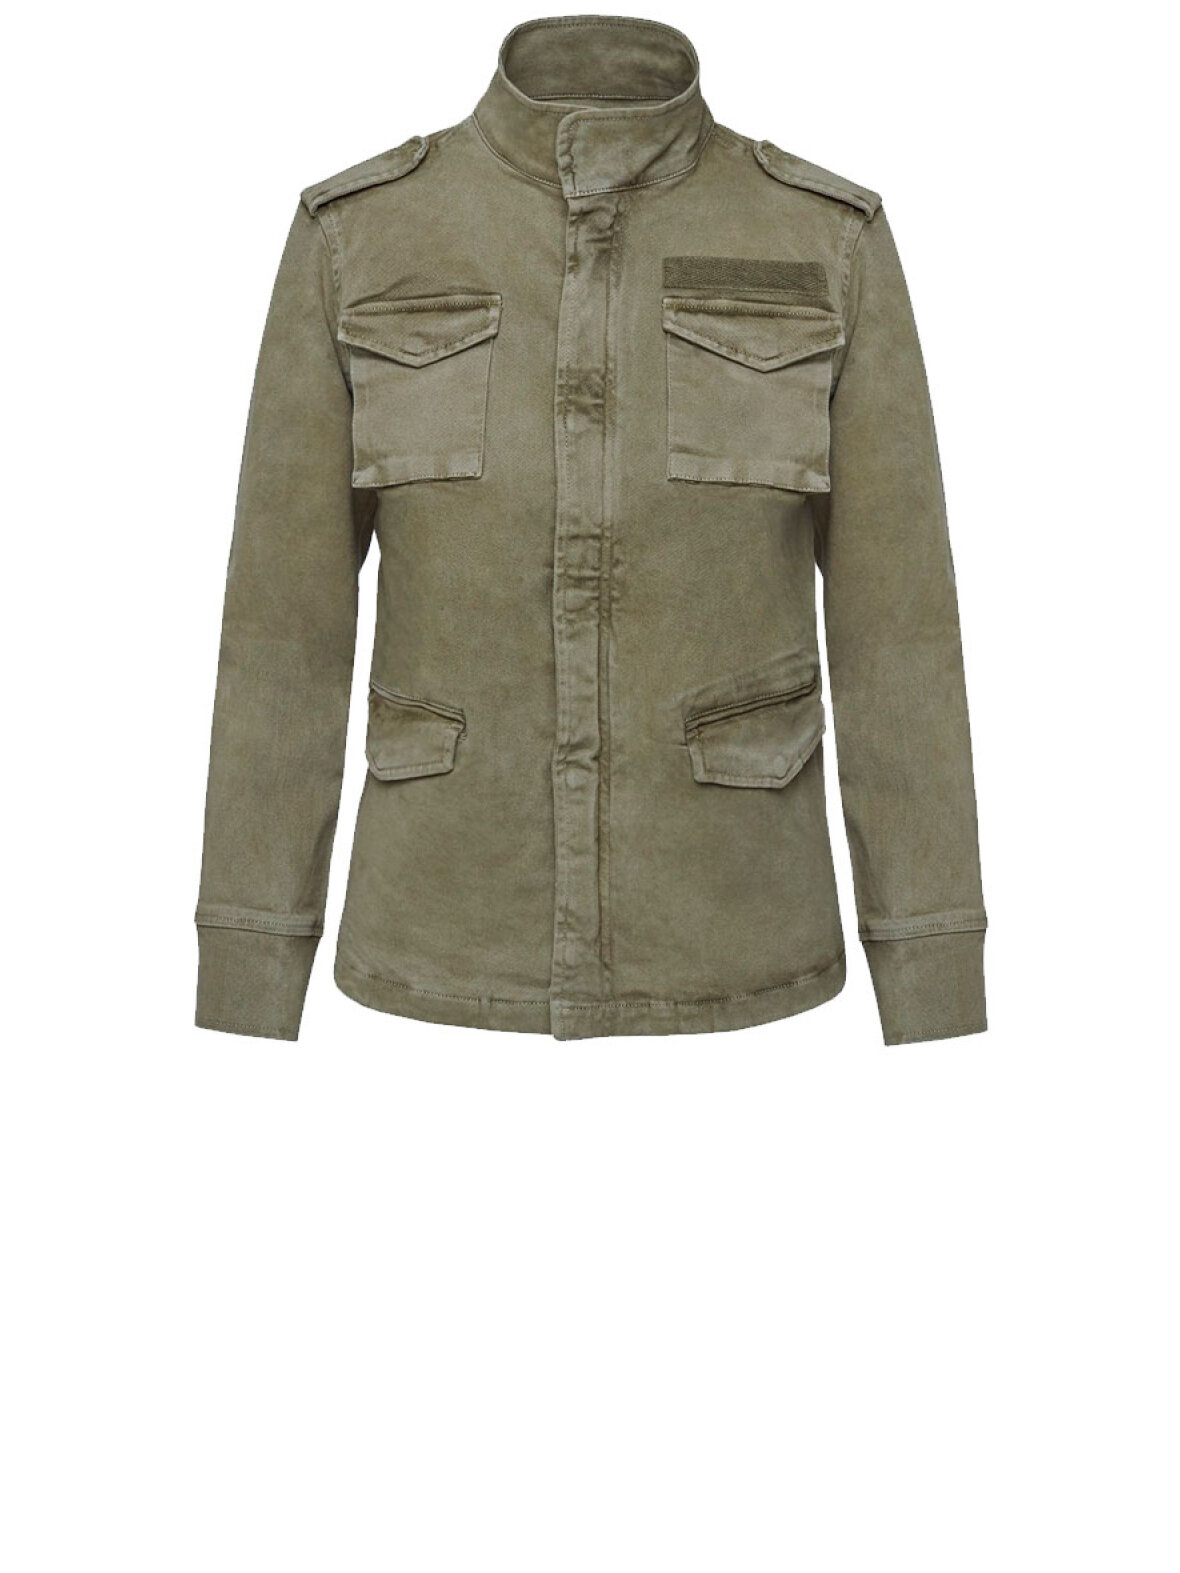 Arving seng Mere A'POKE - Anine Bing Army Jacket Green - Shop army denim jakke